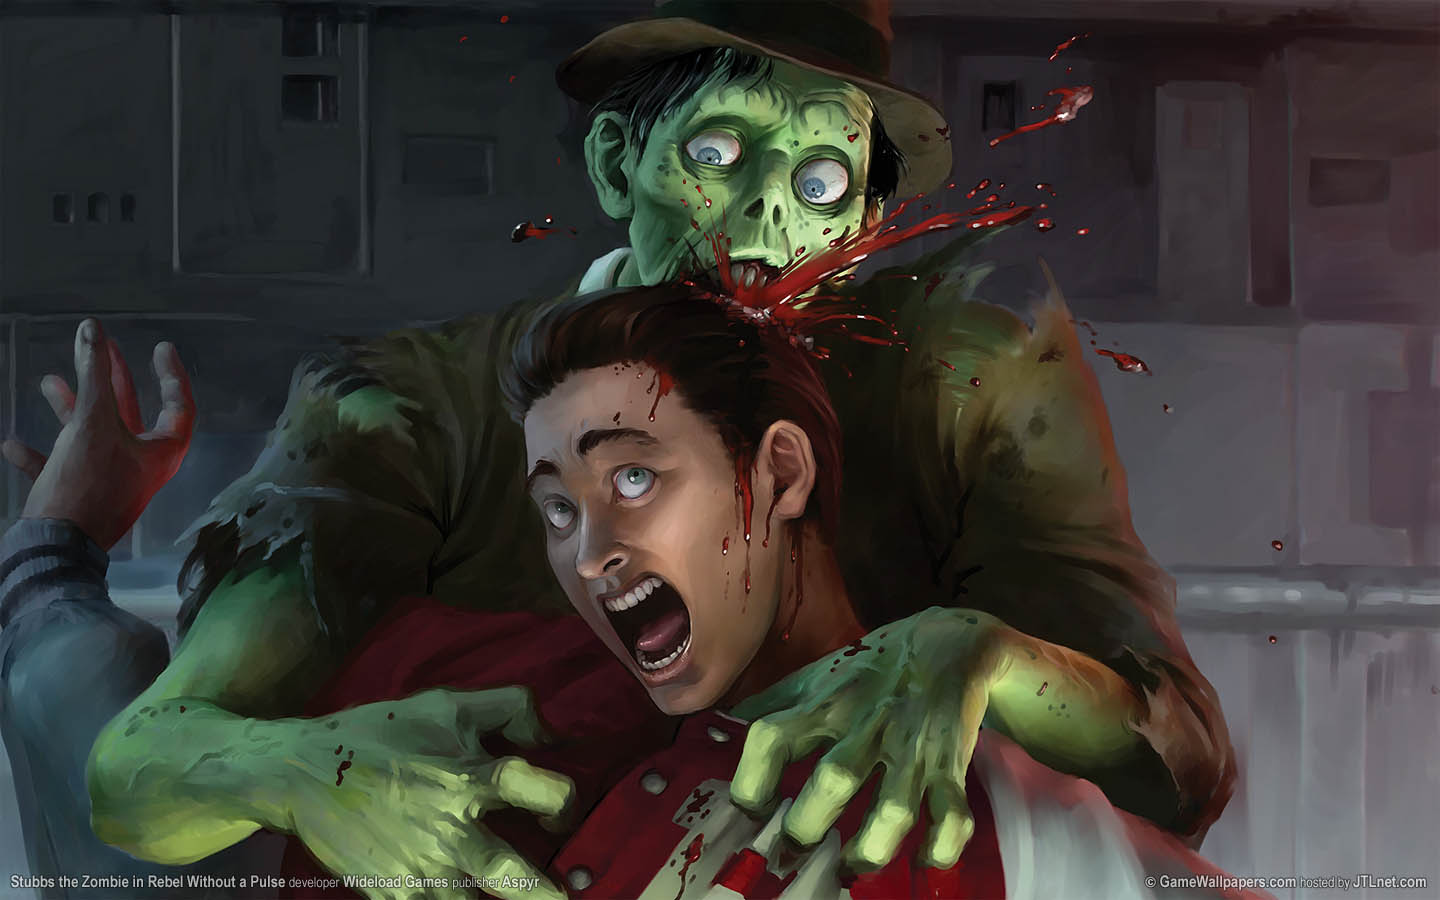 Stubbs the Zombie in Rebel Without a Pulse fondo de escritorio 02 1440x900